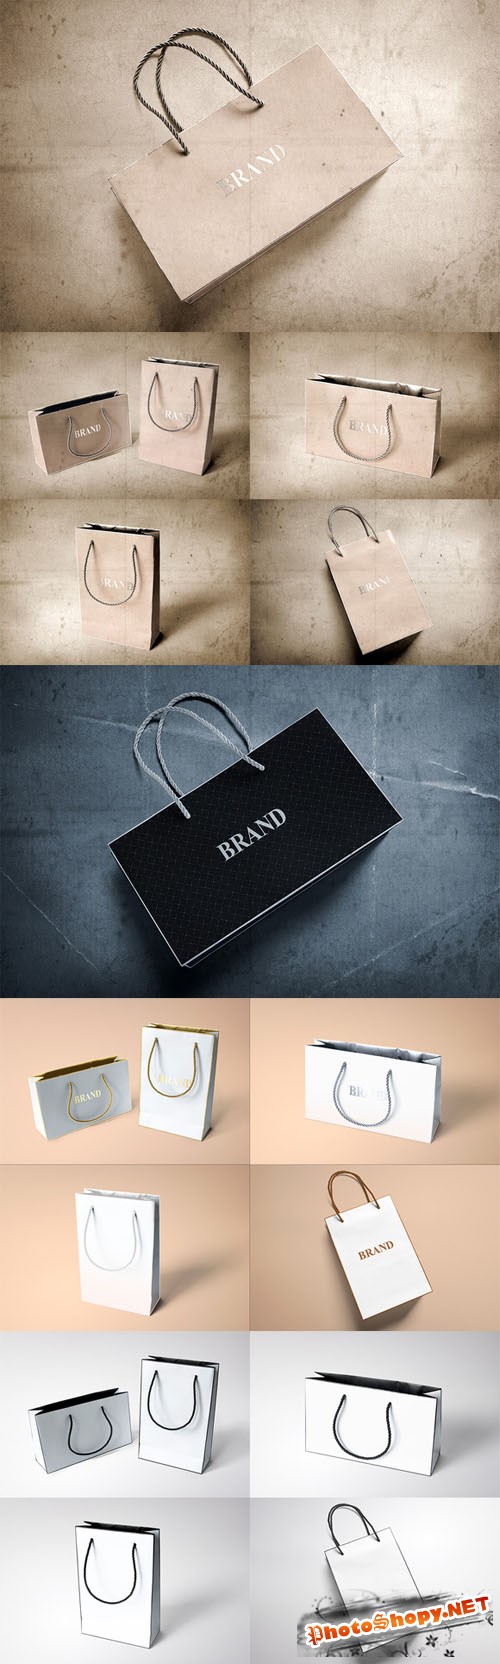 CreativeMarket - Paper Bags Mock-ups